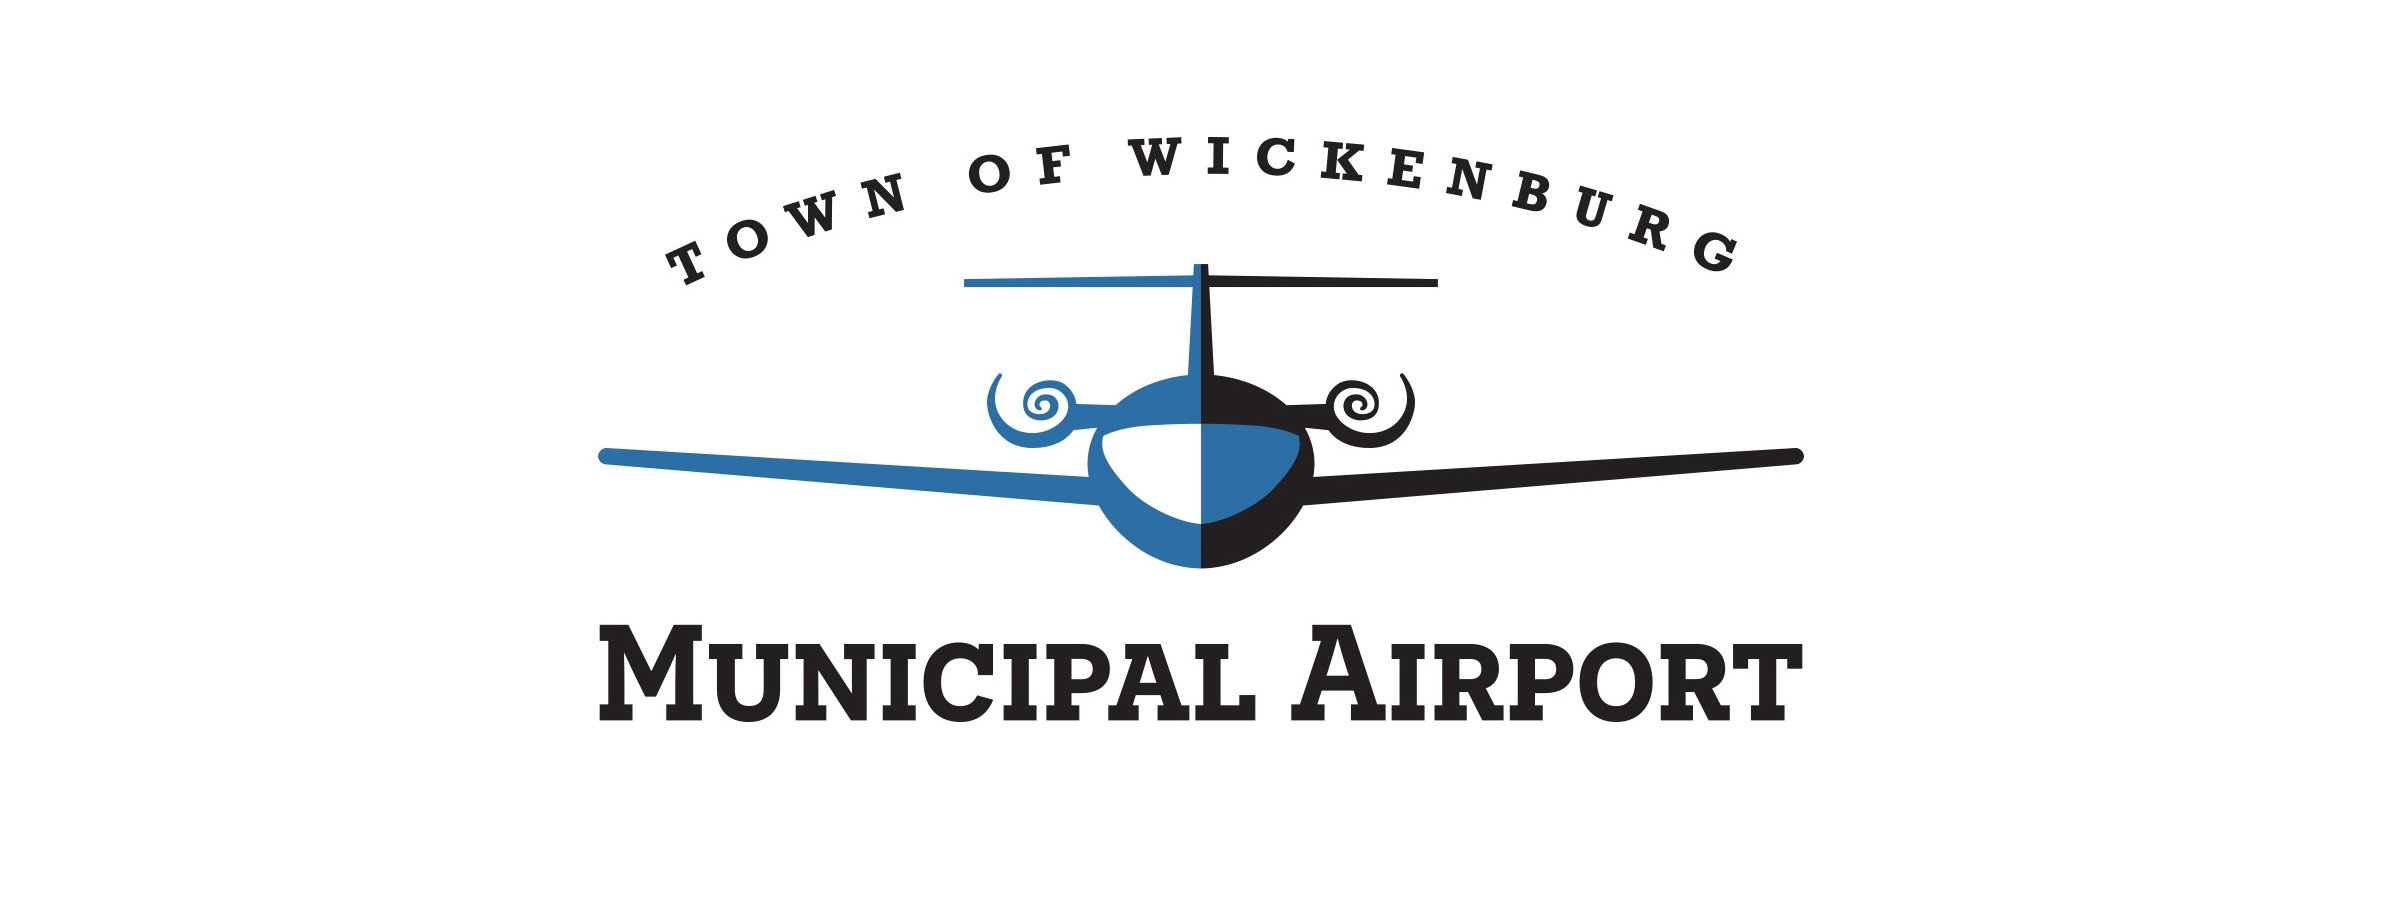 Wickenburg Airport logo.jpg